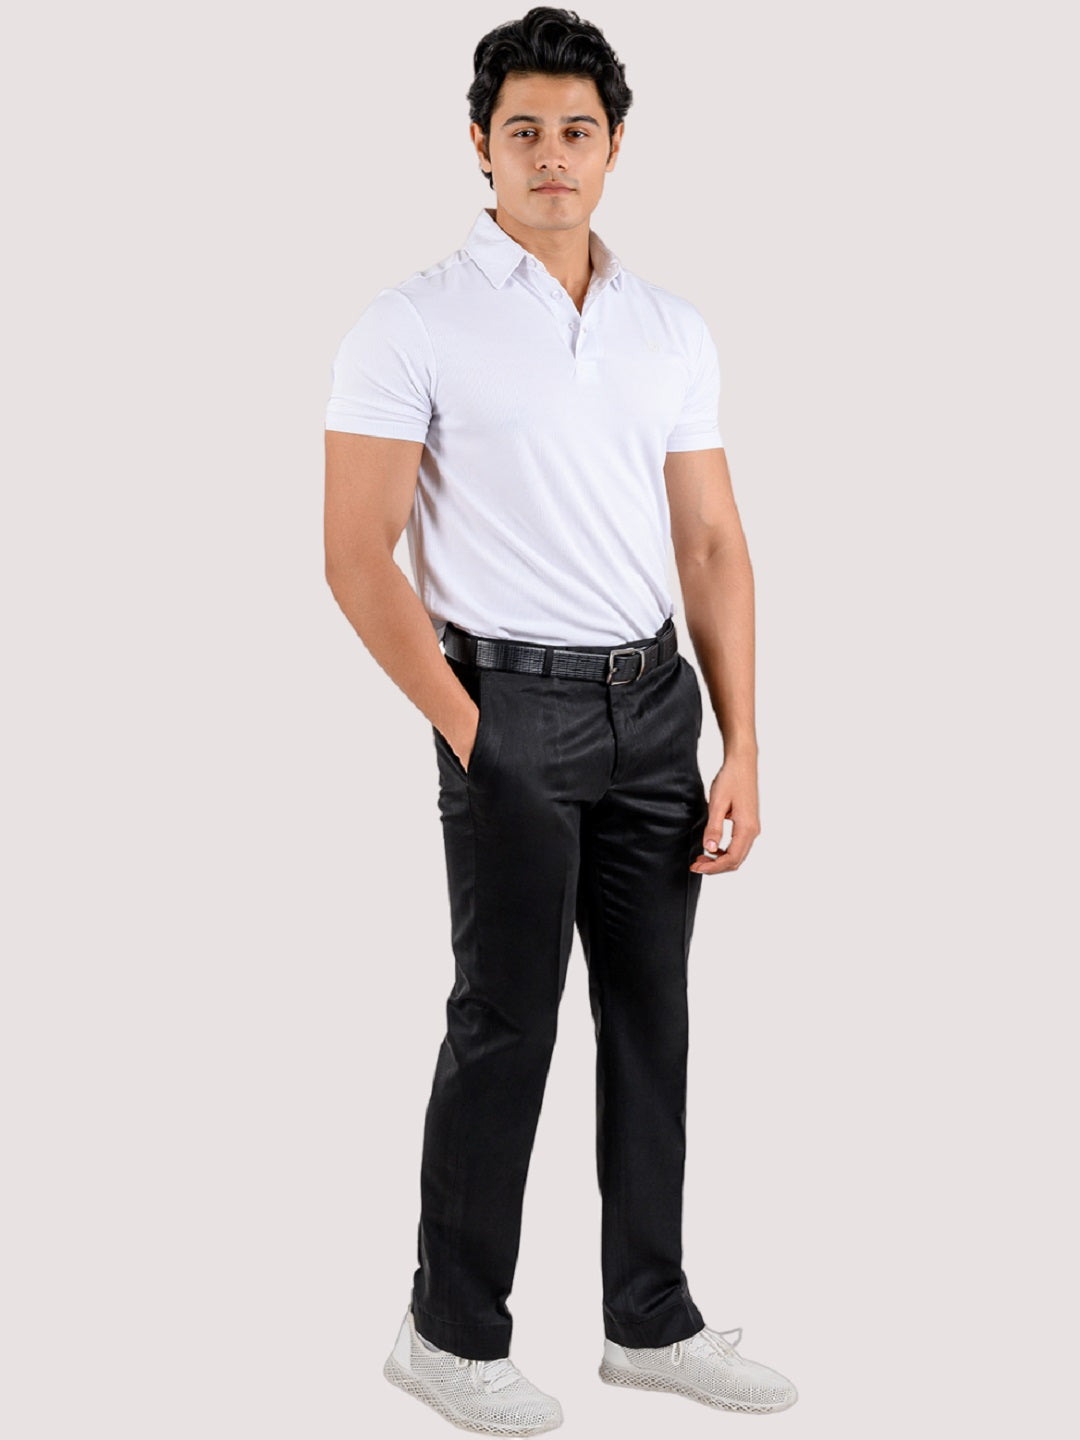 Performance Sports Collar Tshirt - Pack of 2 Black & White